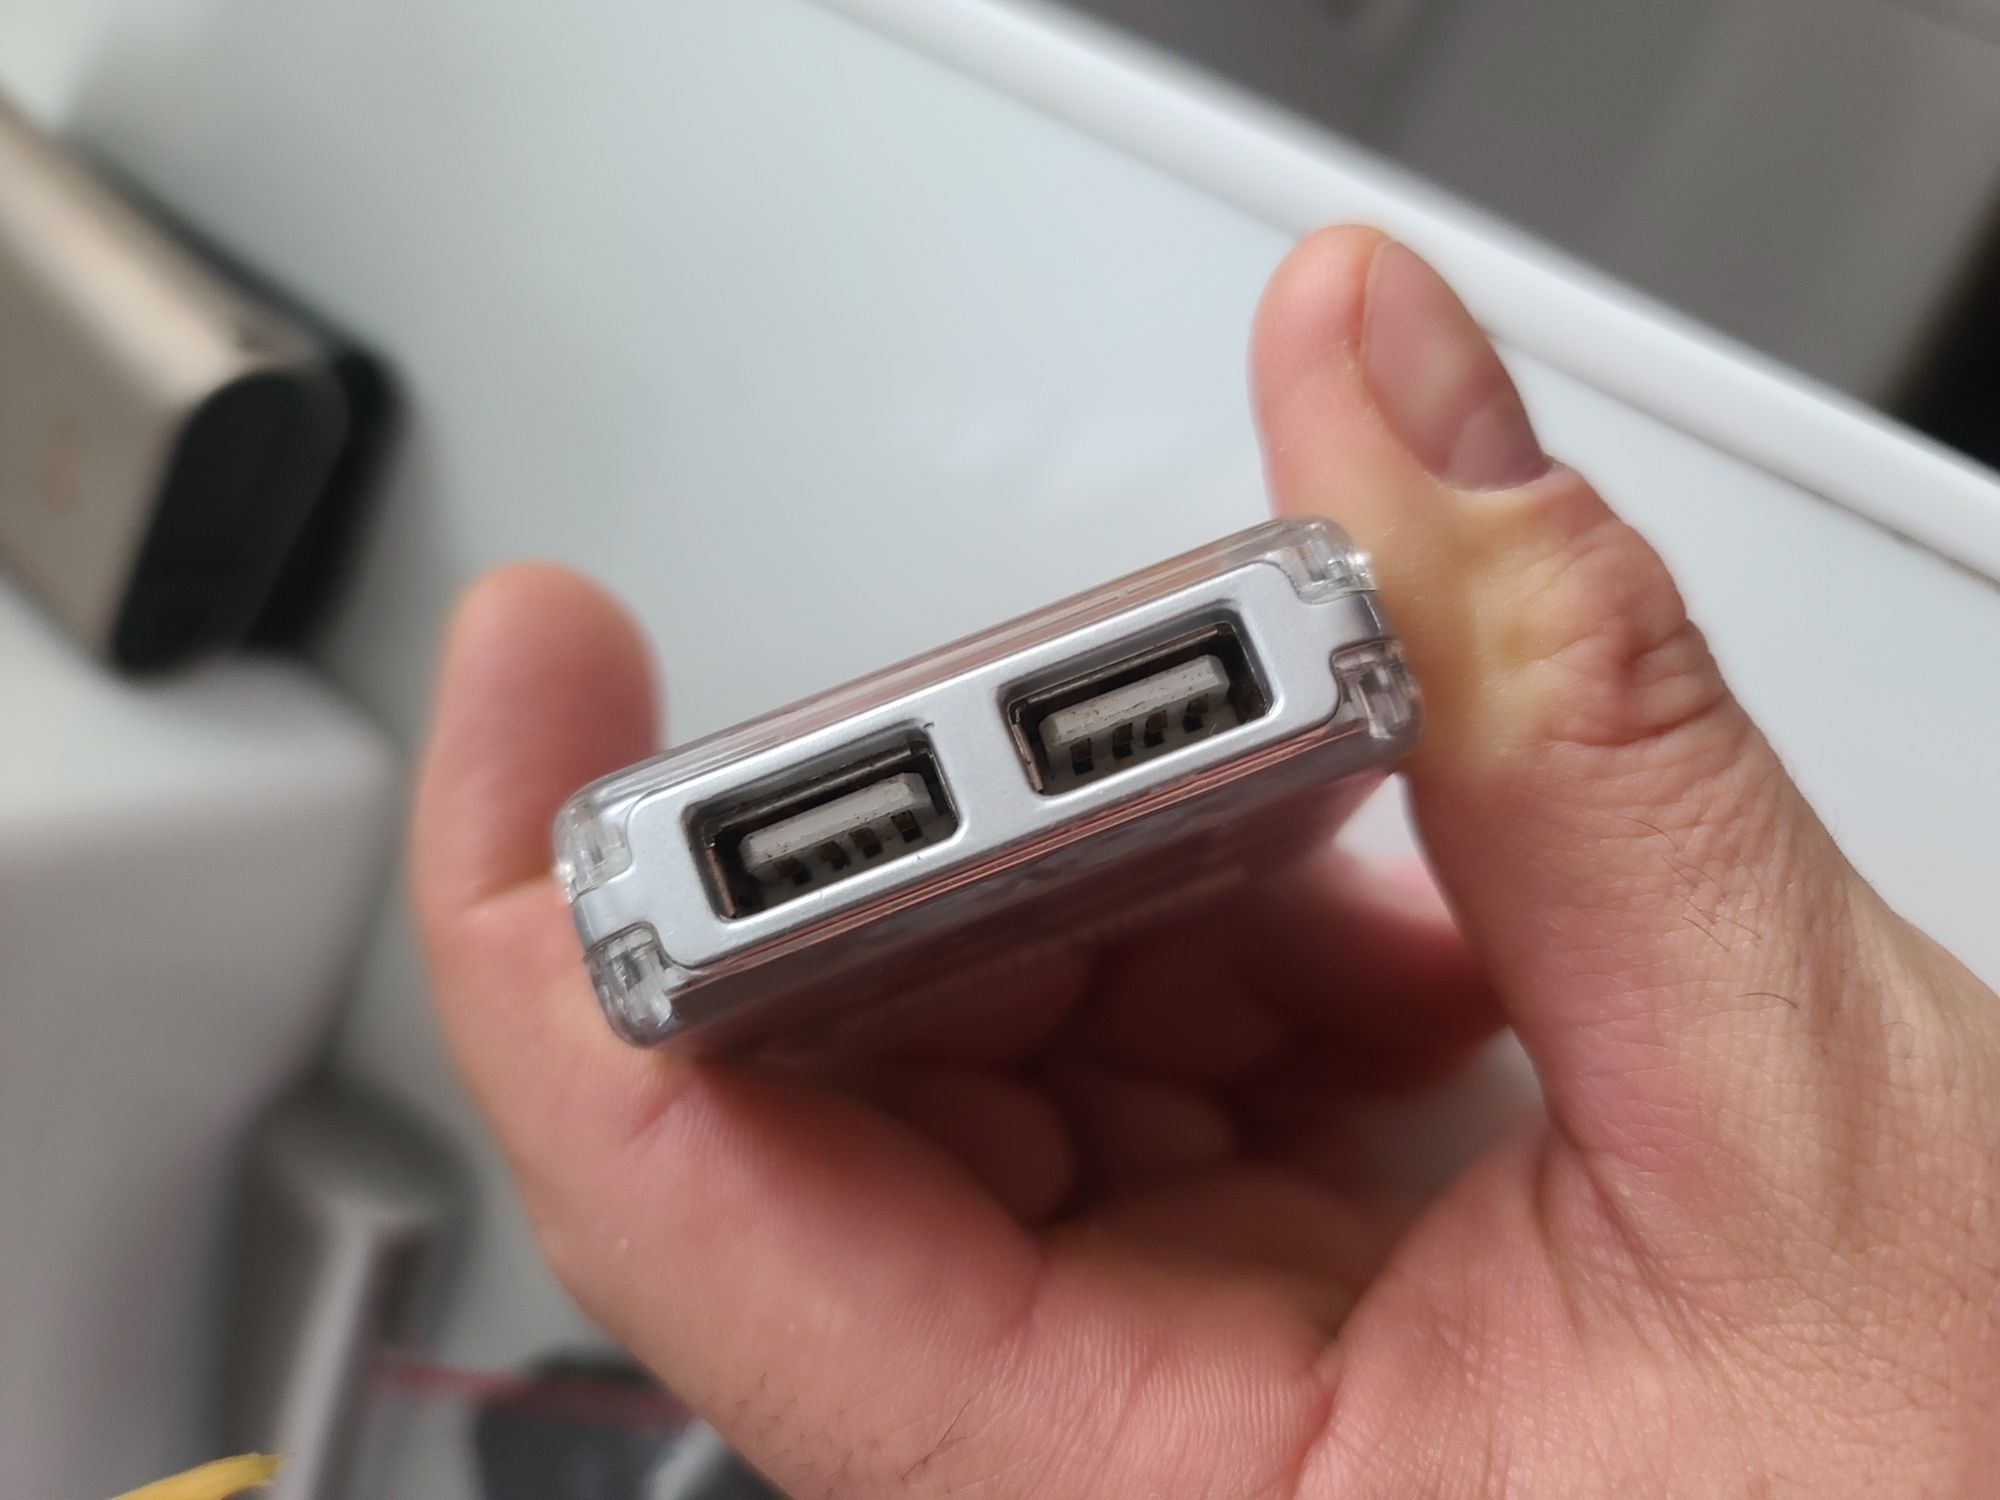 A4TECH HUB-56-3 Silver USB Hub